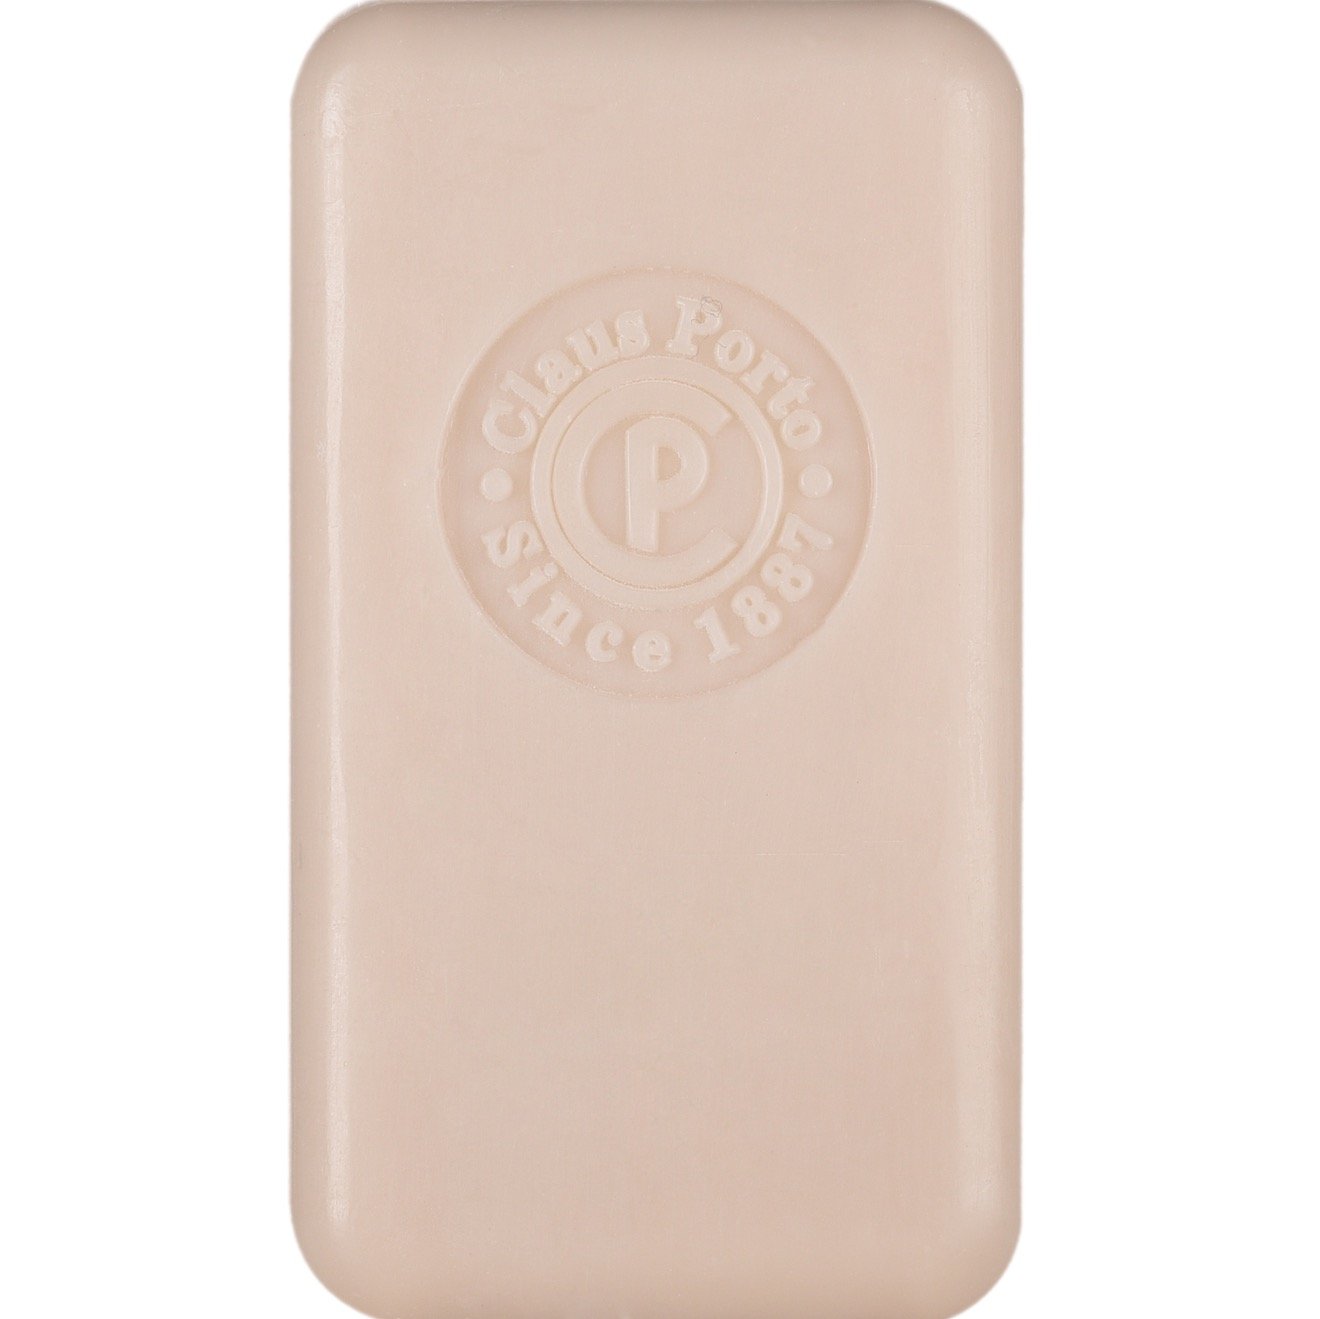 Mini Soap Bar 8741 - Pear Sandalwood